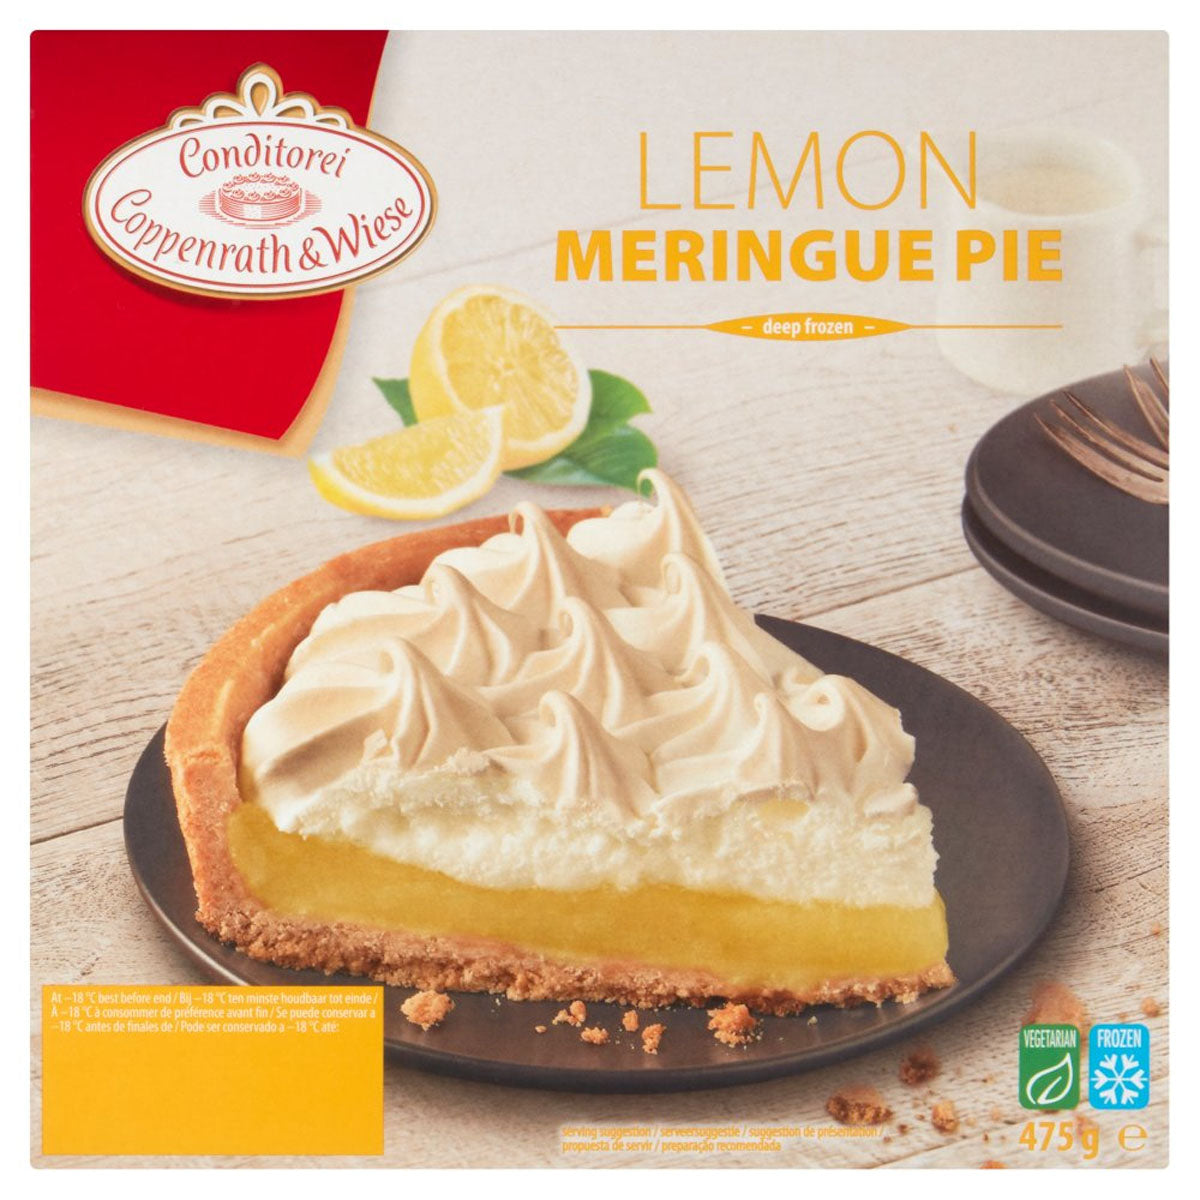 Conditorei Coppenrath & Wiese - Lemon Meringue Pie - 475g - Continental Food Store